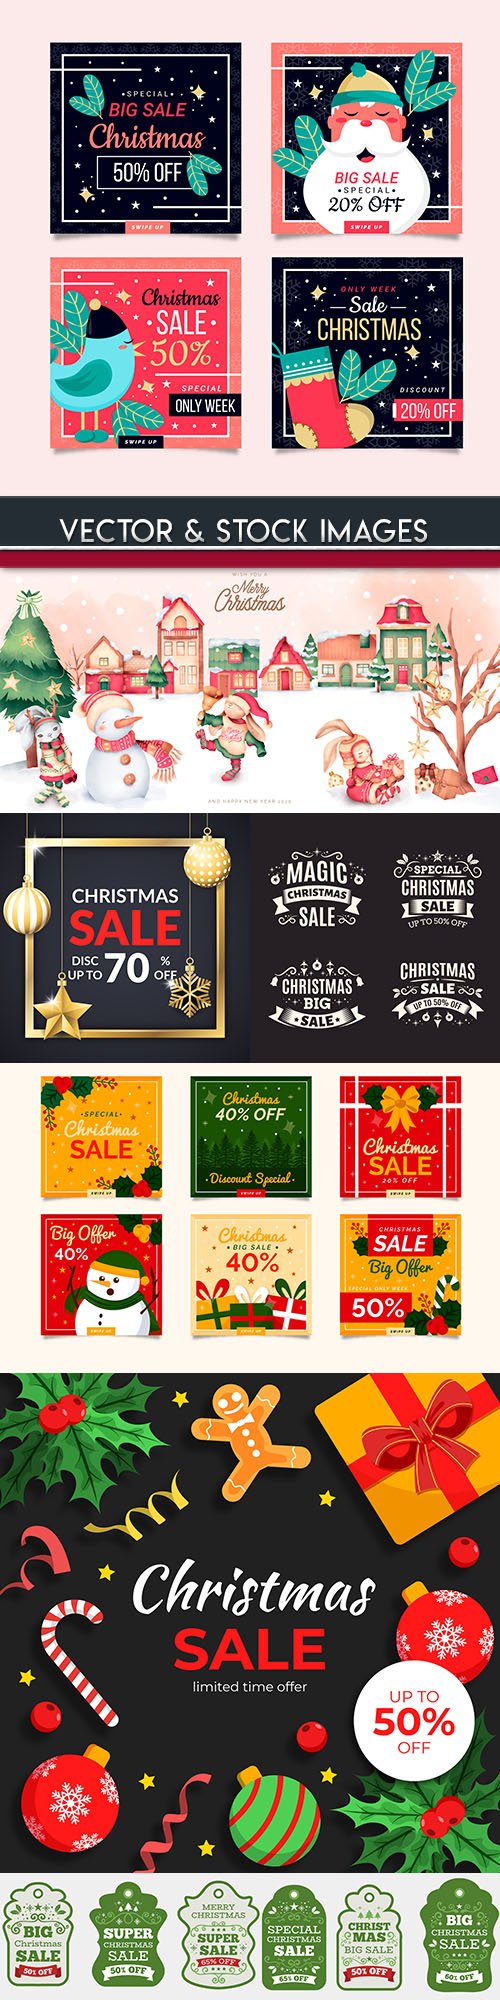 Merry Christmas sale 2020 decorative design